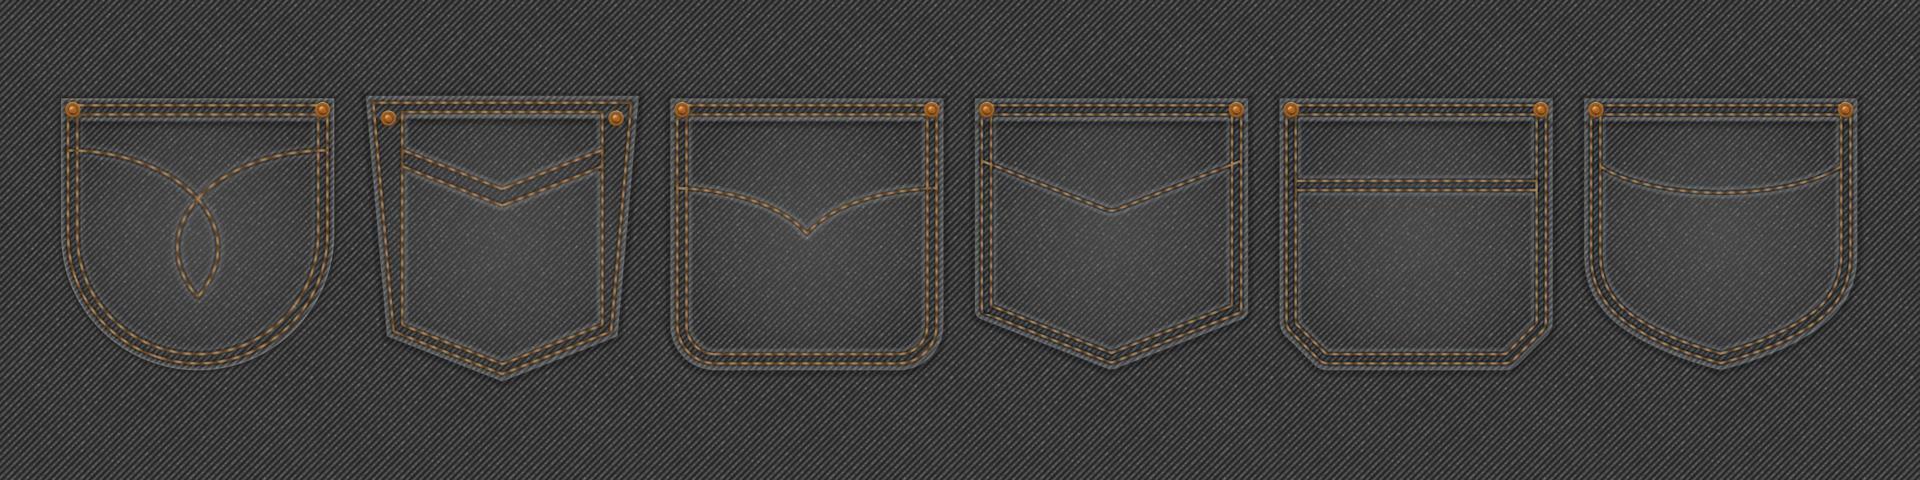 Black denim cloth texture with pockets vector